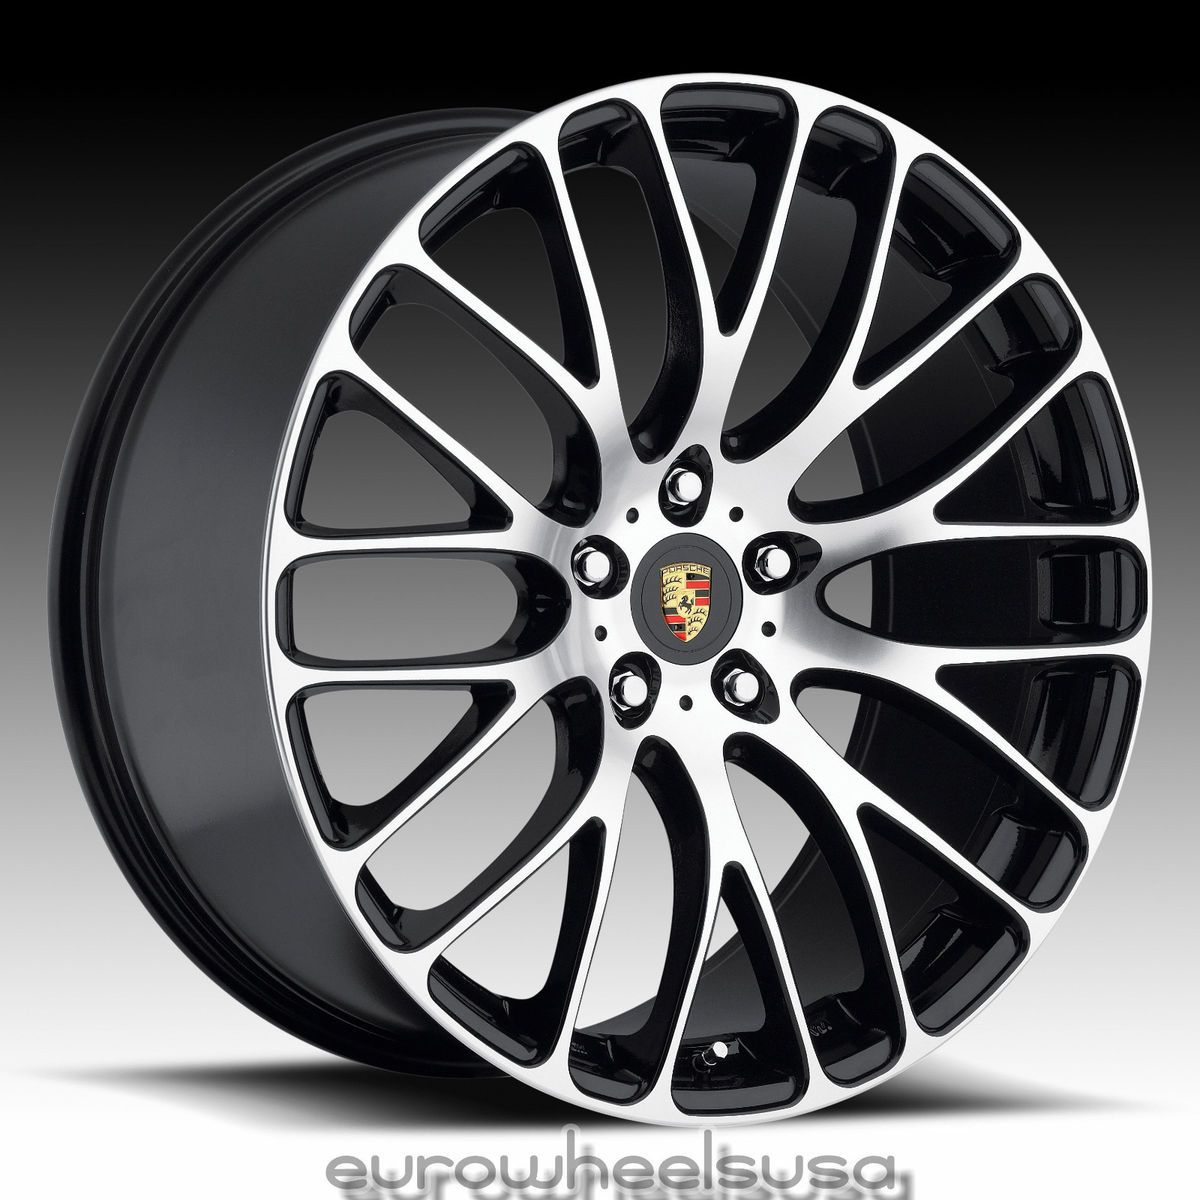 HR6 Wheels for Porsche Cayenne GTS VW Touareg Audi Q7 Rims Set